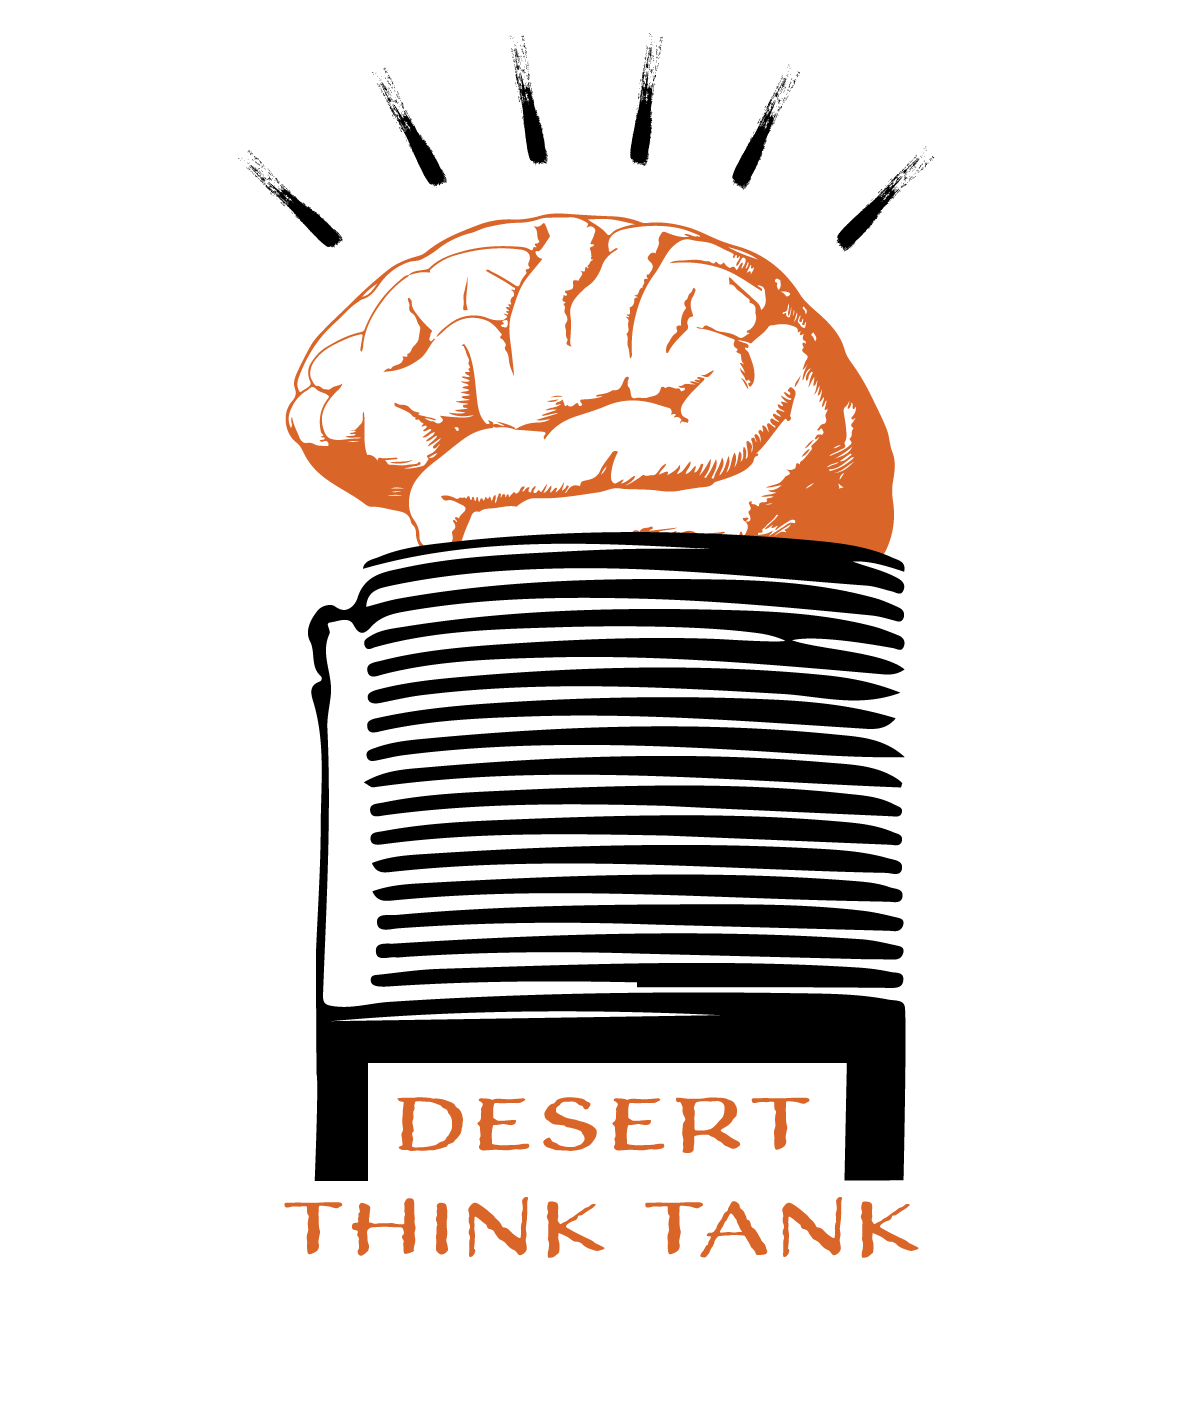 The Desert Think Tank logo.